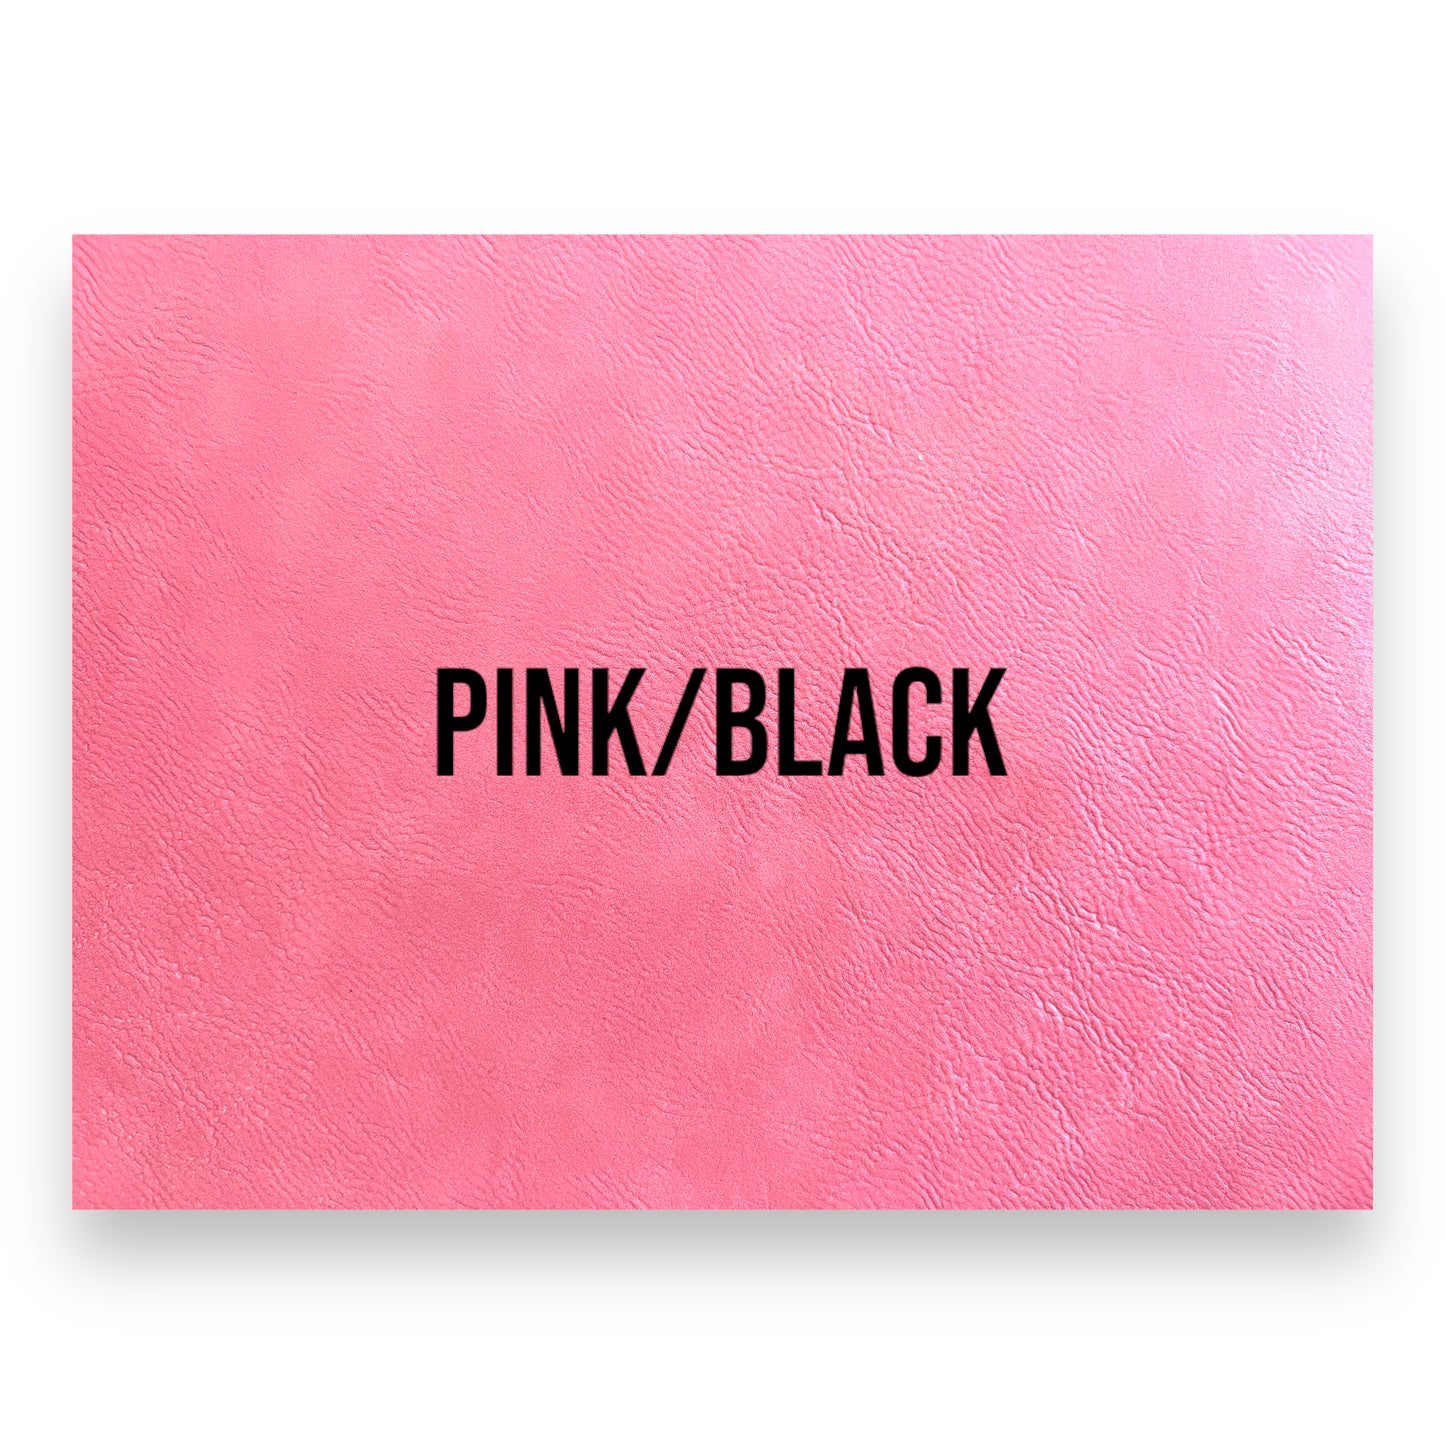 PINK/BLACK HYDBOND LEATHERETTE SHEET (12"x24")